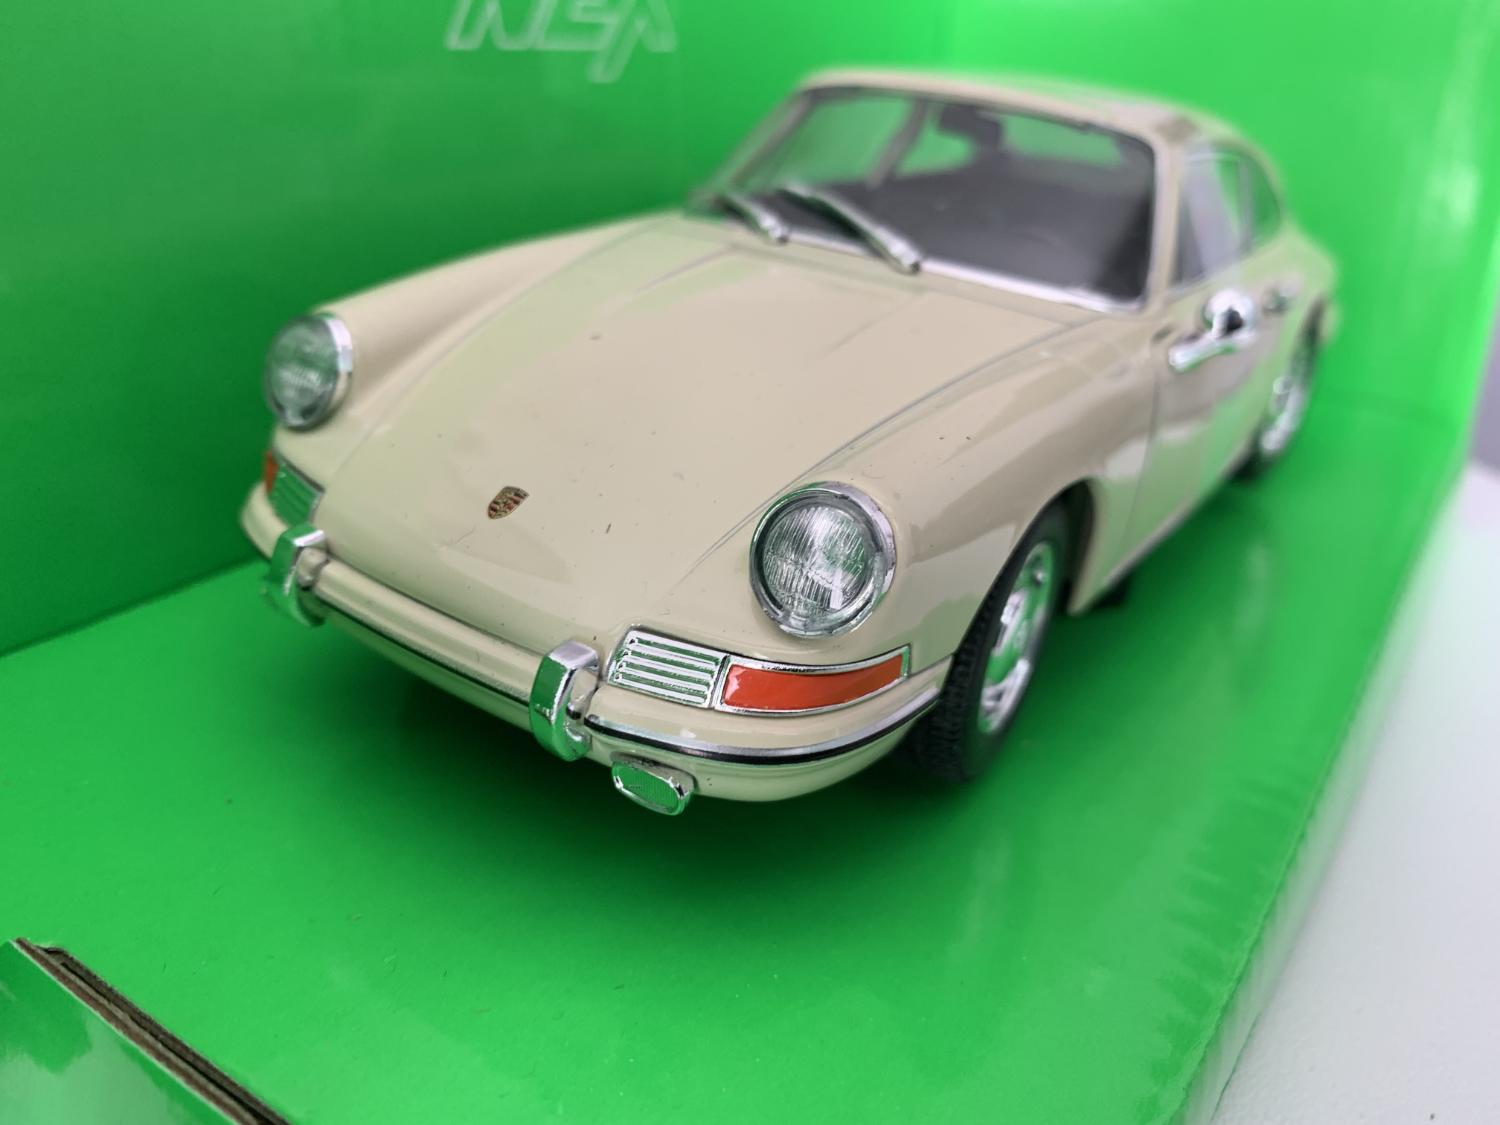 Porsche 911 1964 in beige 1:24 scale model from Welly